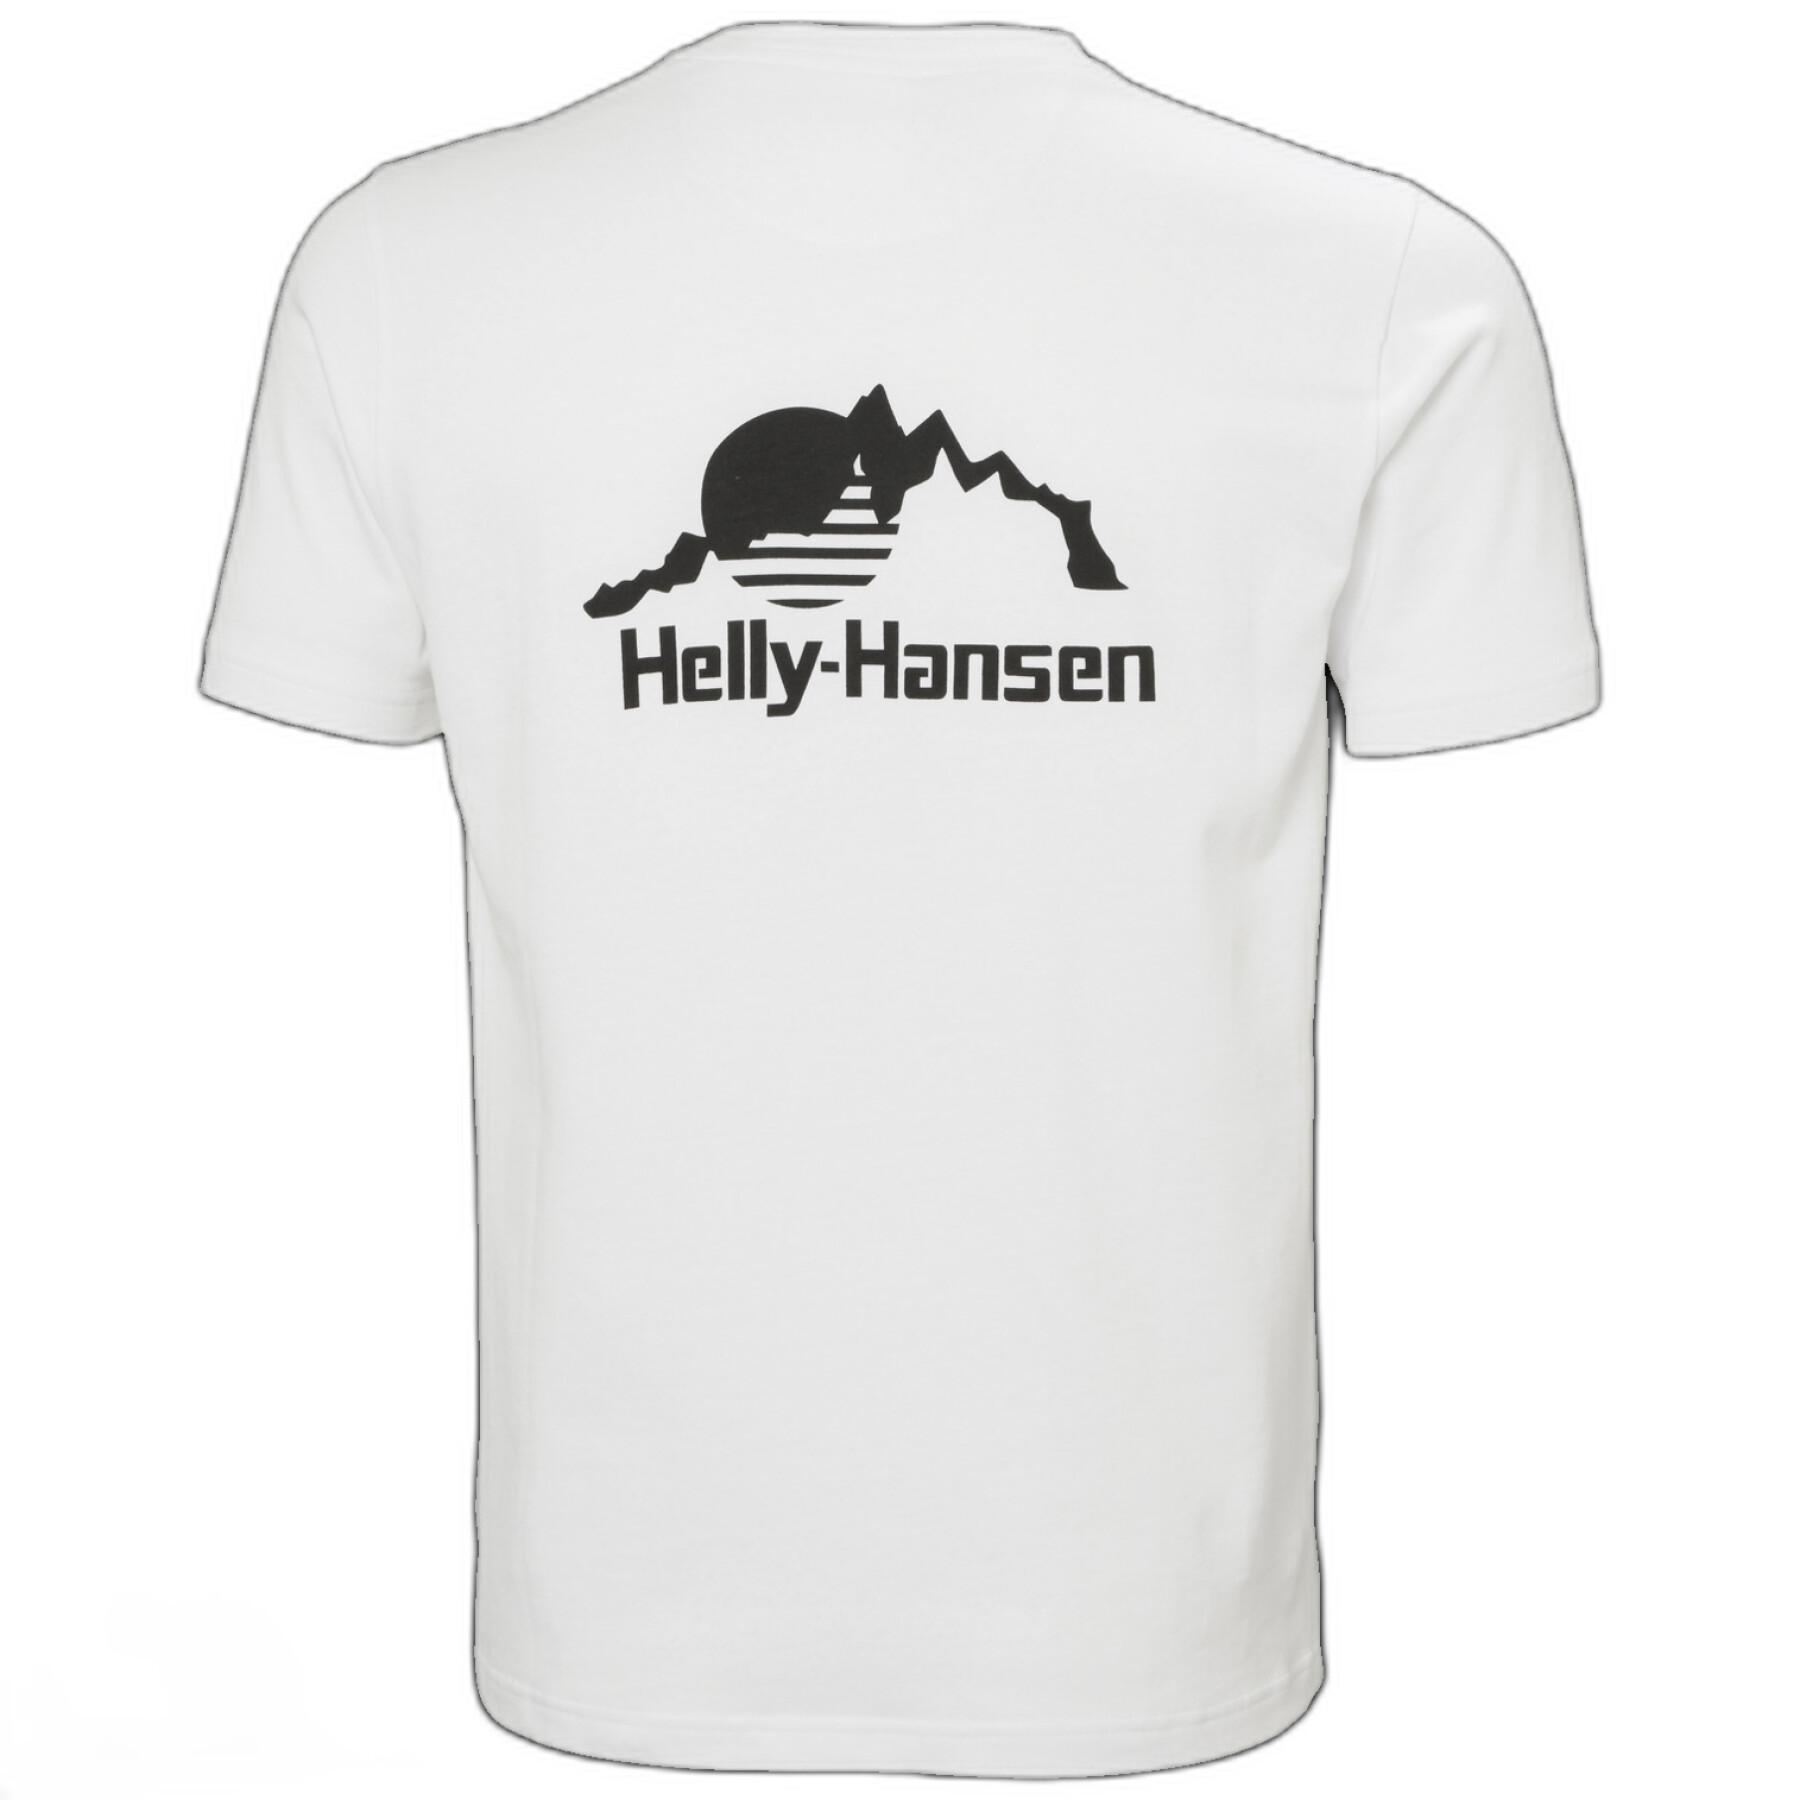 Camiseta Helly Hansen yu patch